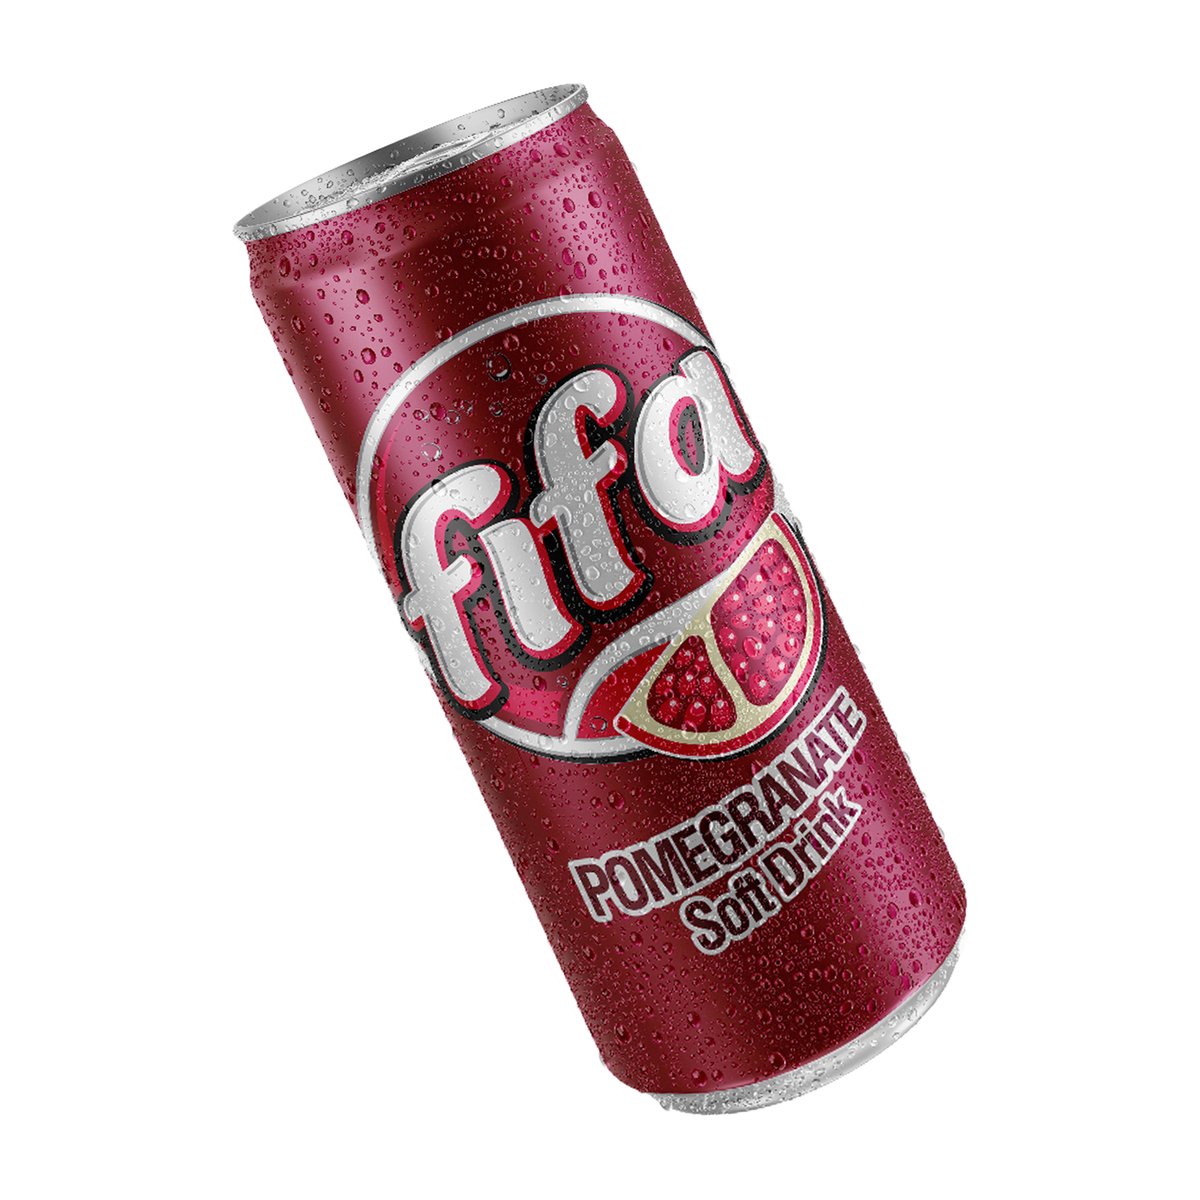 Fifa Pomegranate Soft Drink 250 ml